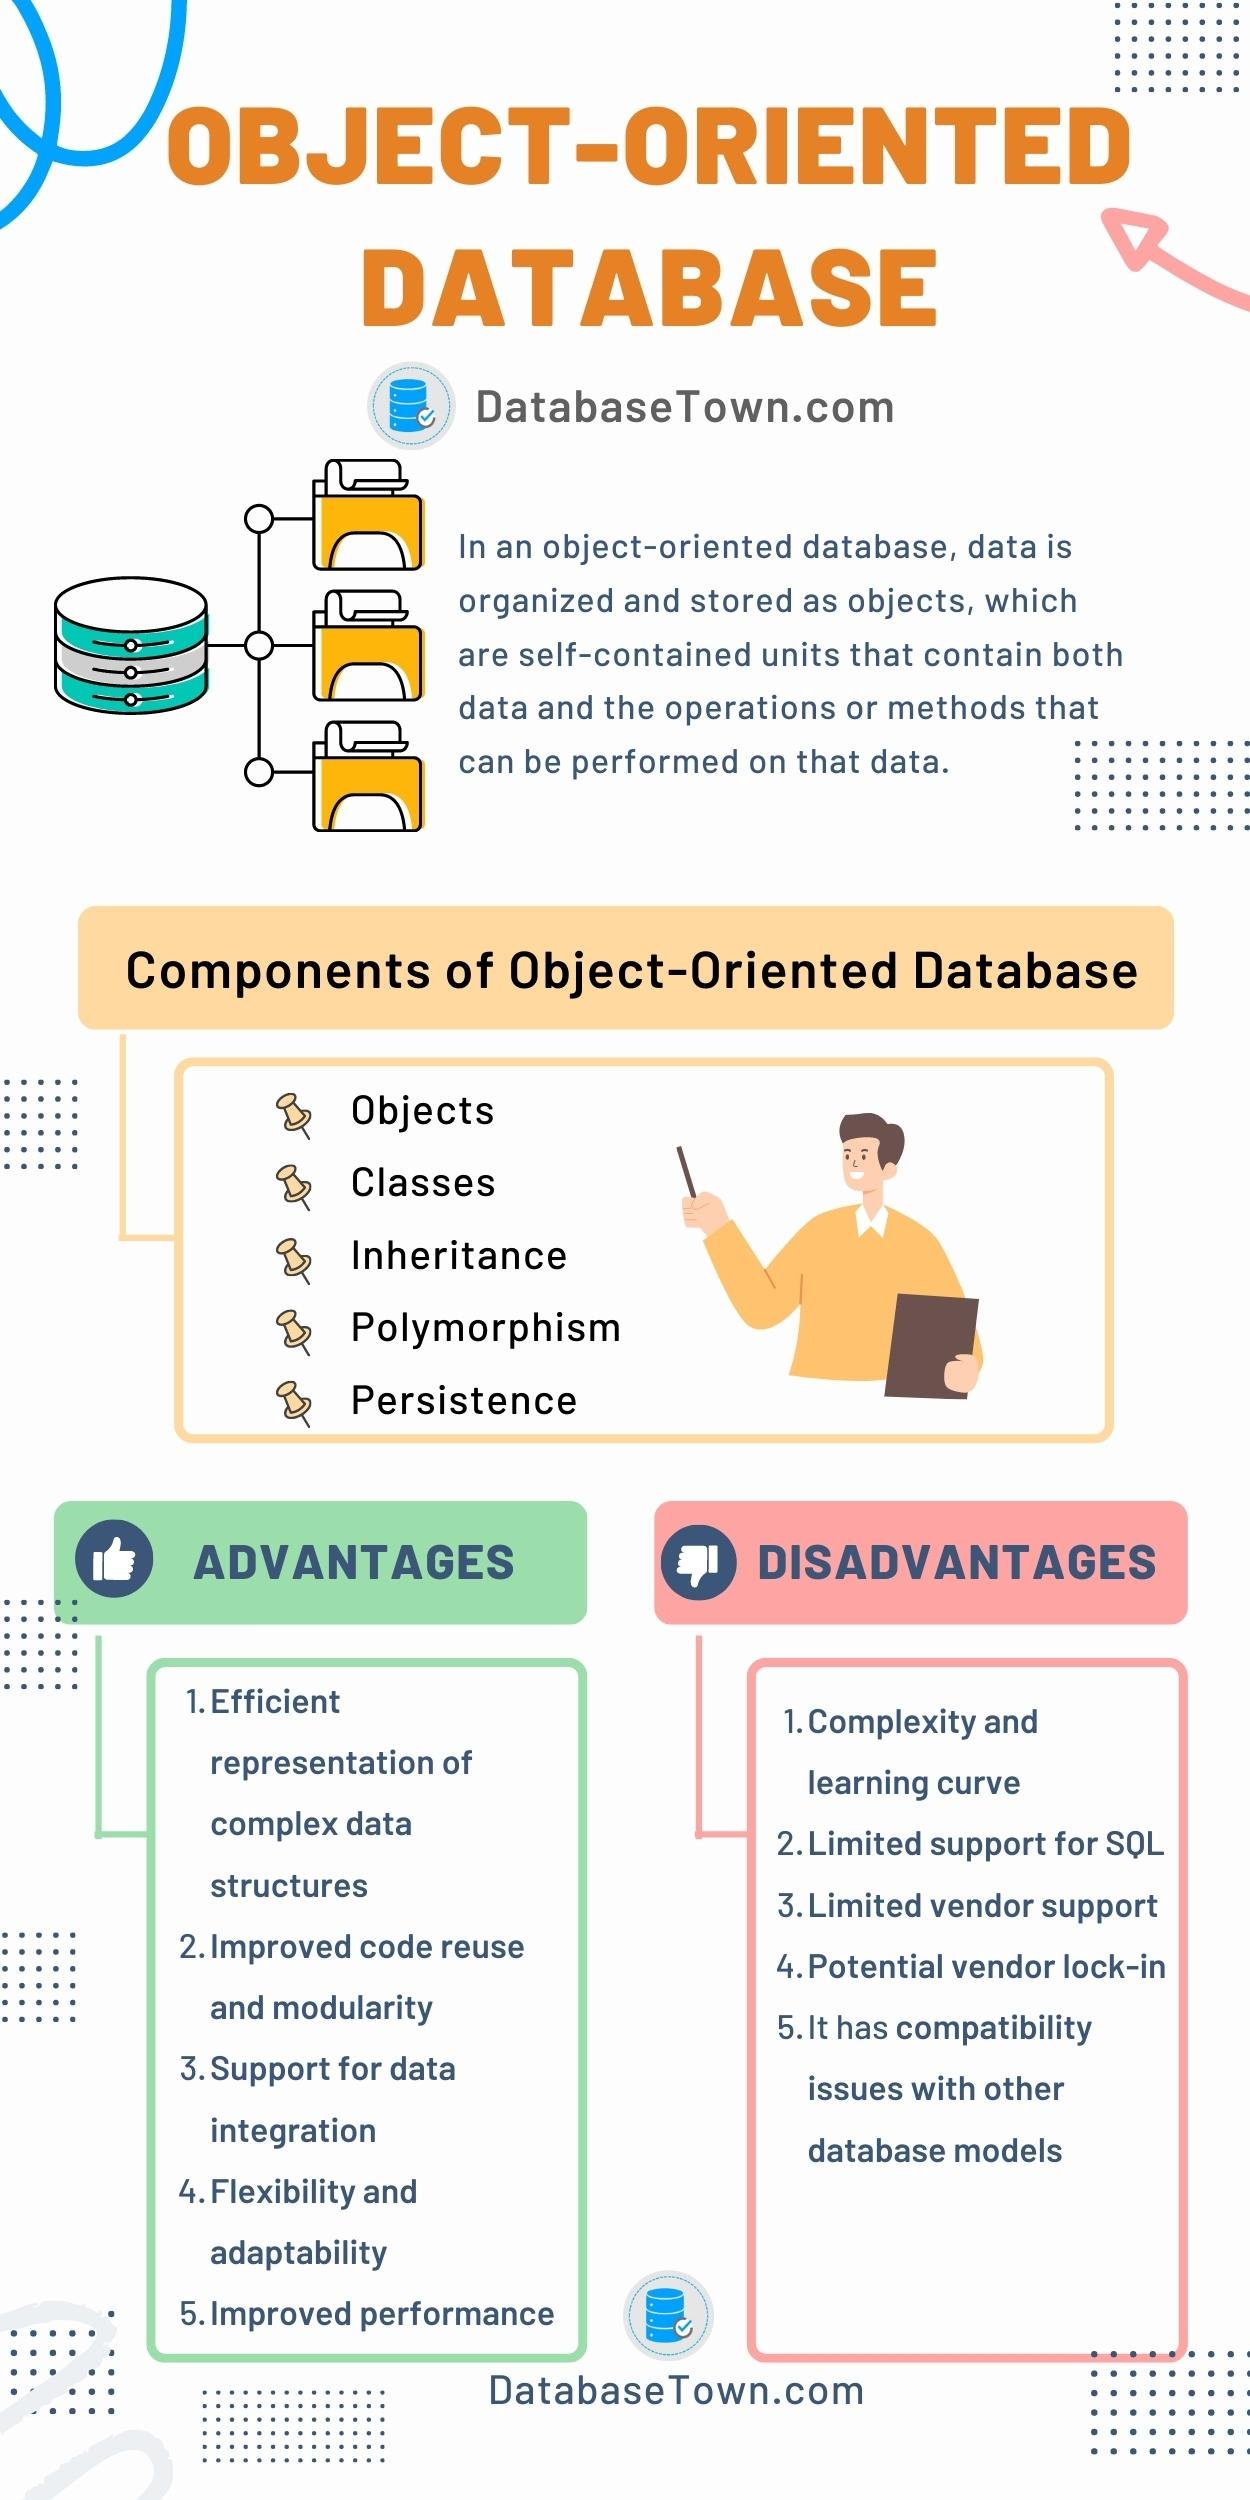 Object-Oriented Database (Components, Advantages, Disadvantages)